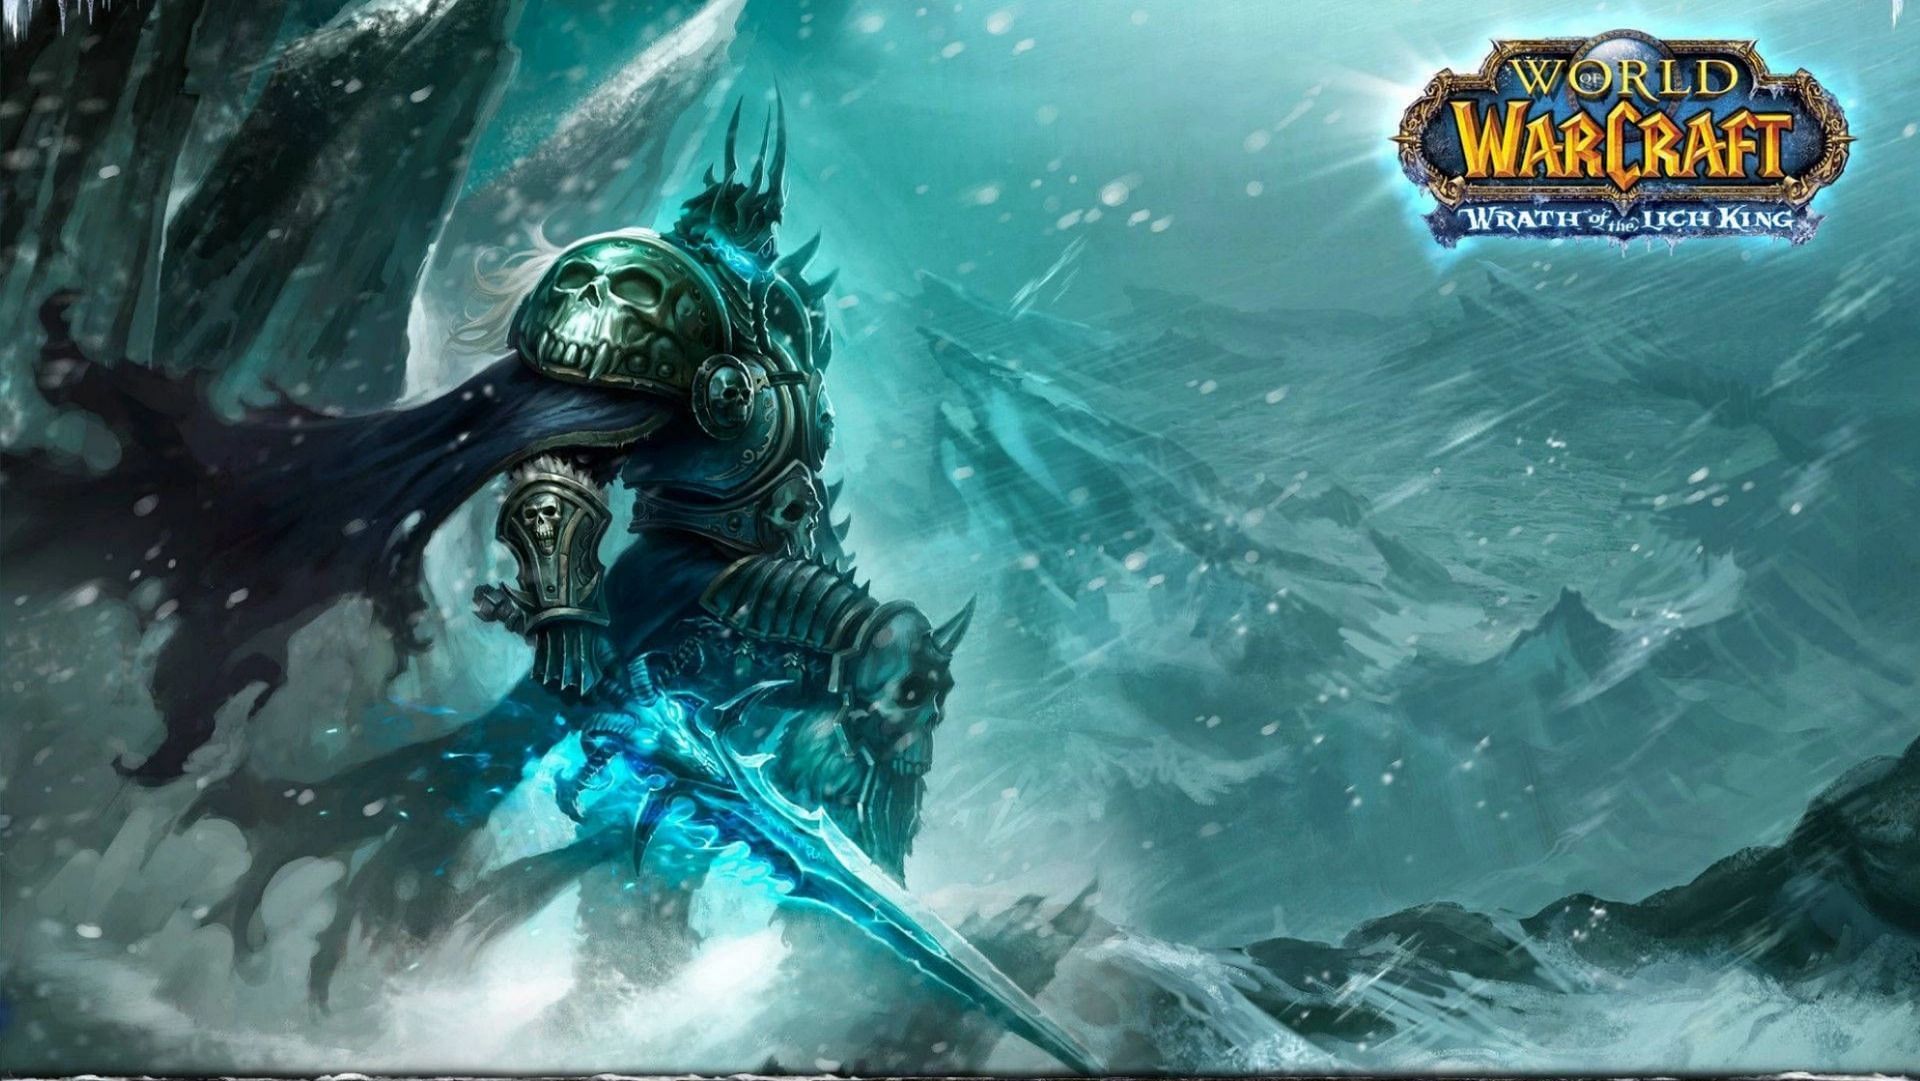  World Of Warcraft Hintergrundbild 1920x1081. WoW Classic: Wrath of the Lich King guide is each race's best class?